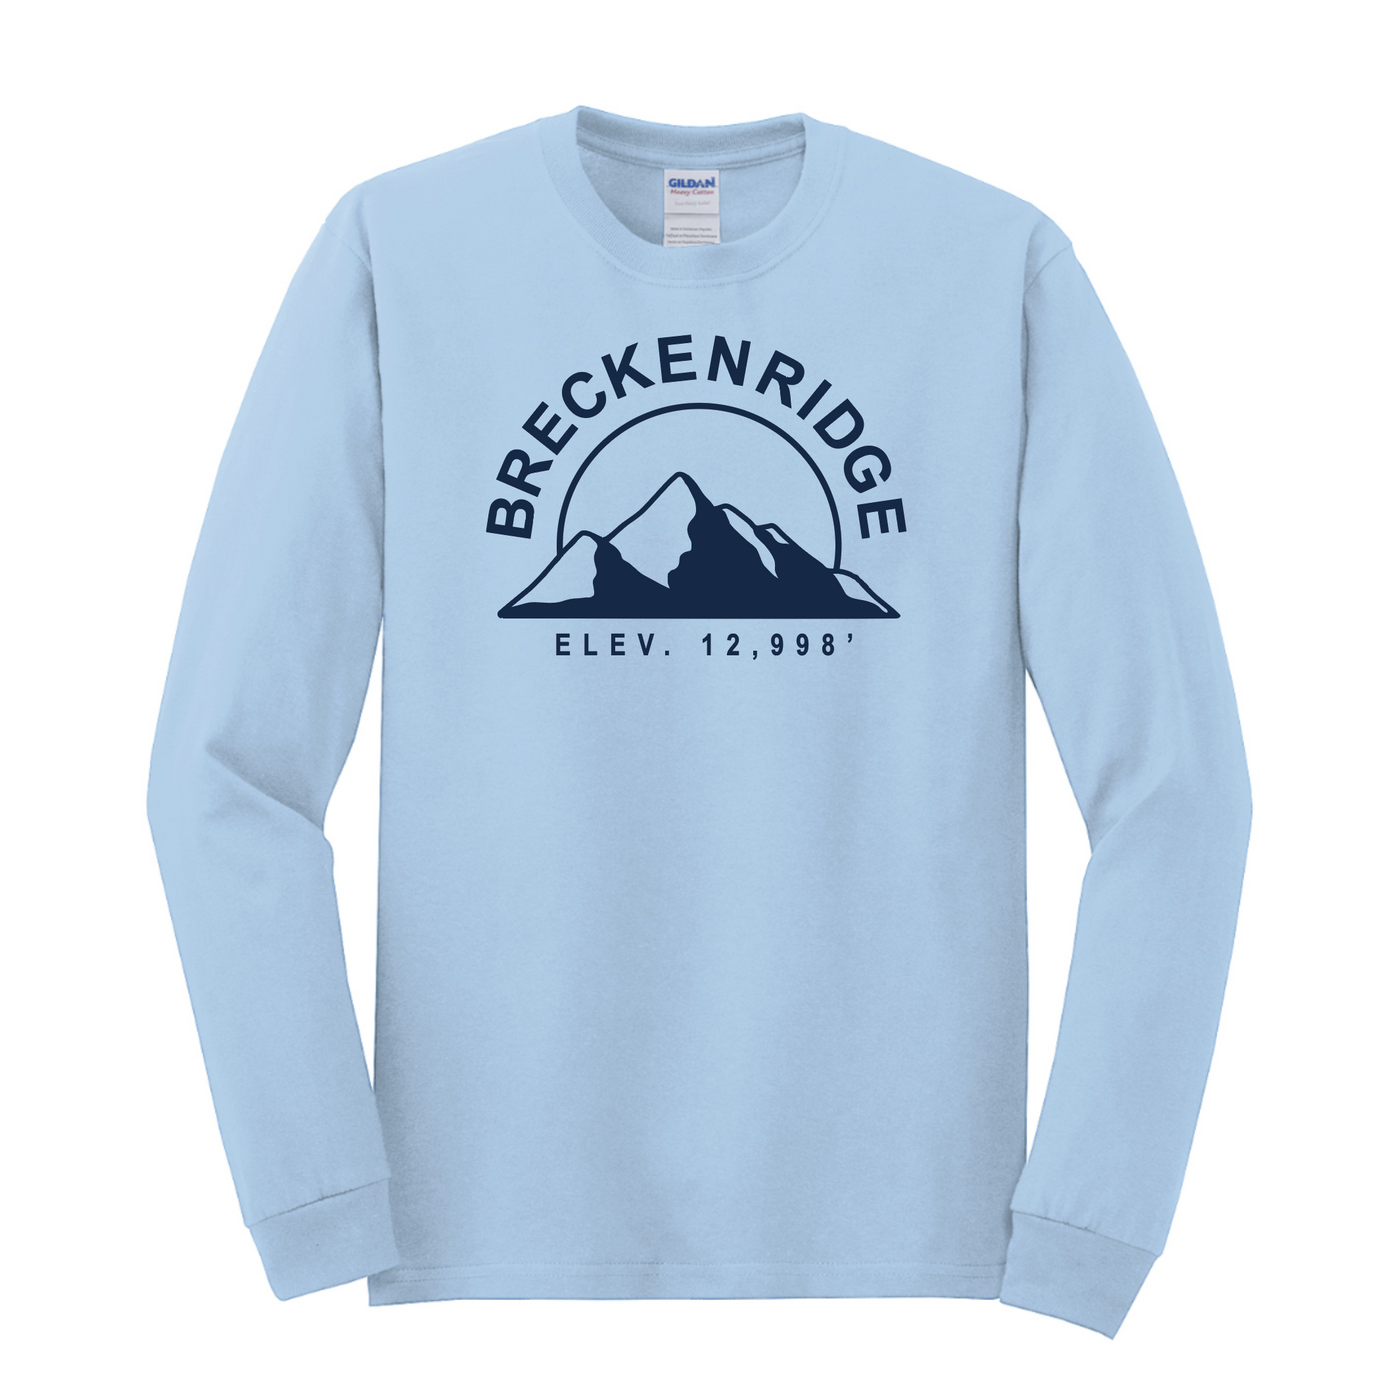 The Breckenridge Halo Mountain Long Sleeve Shirt